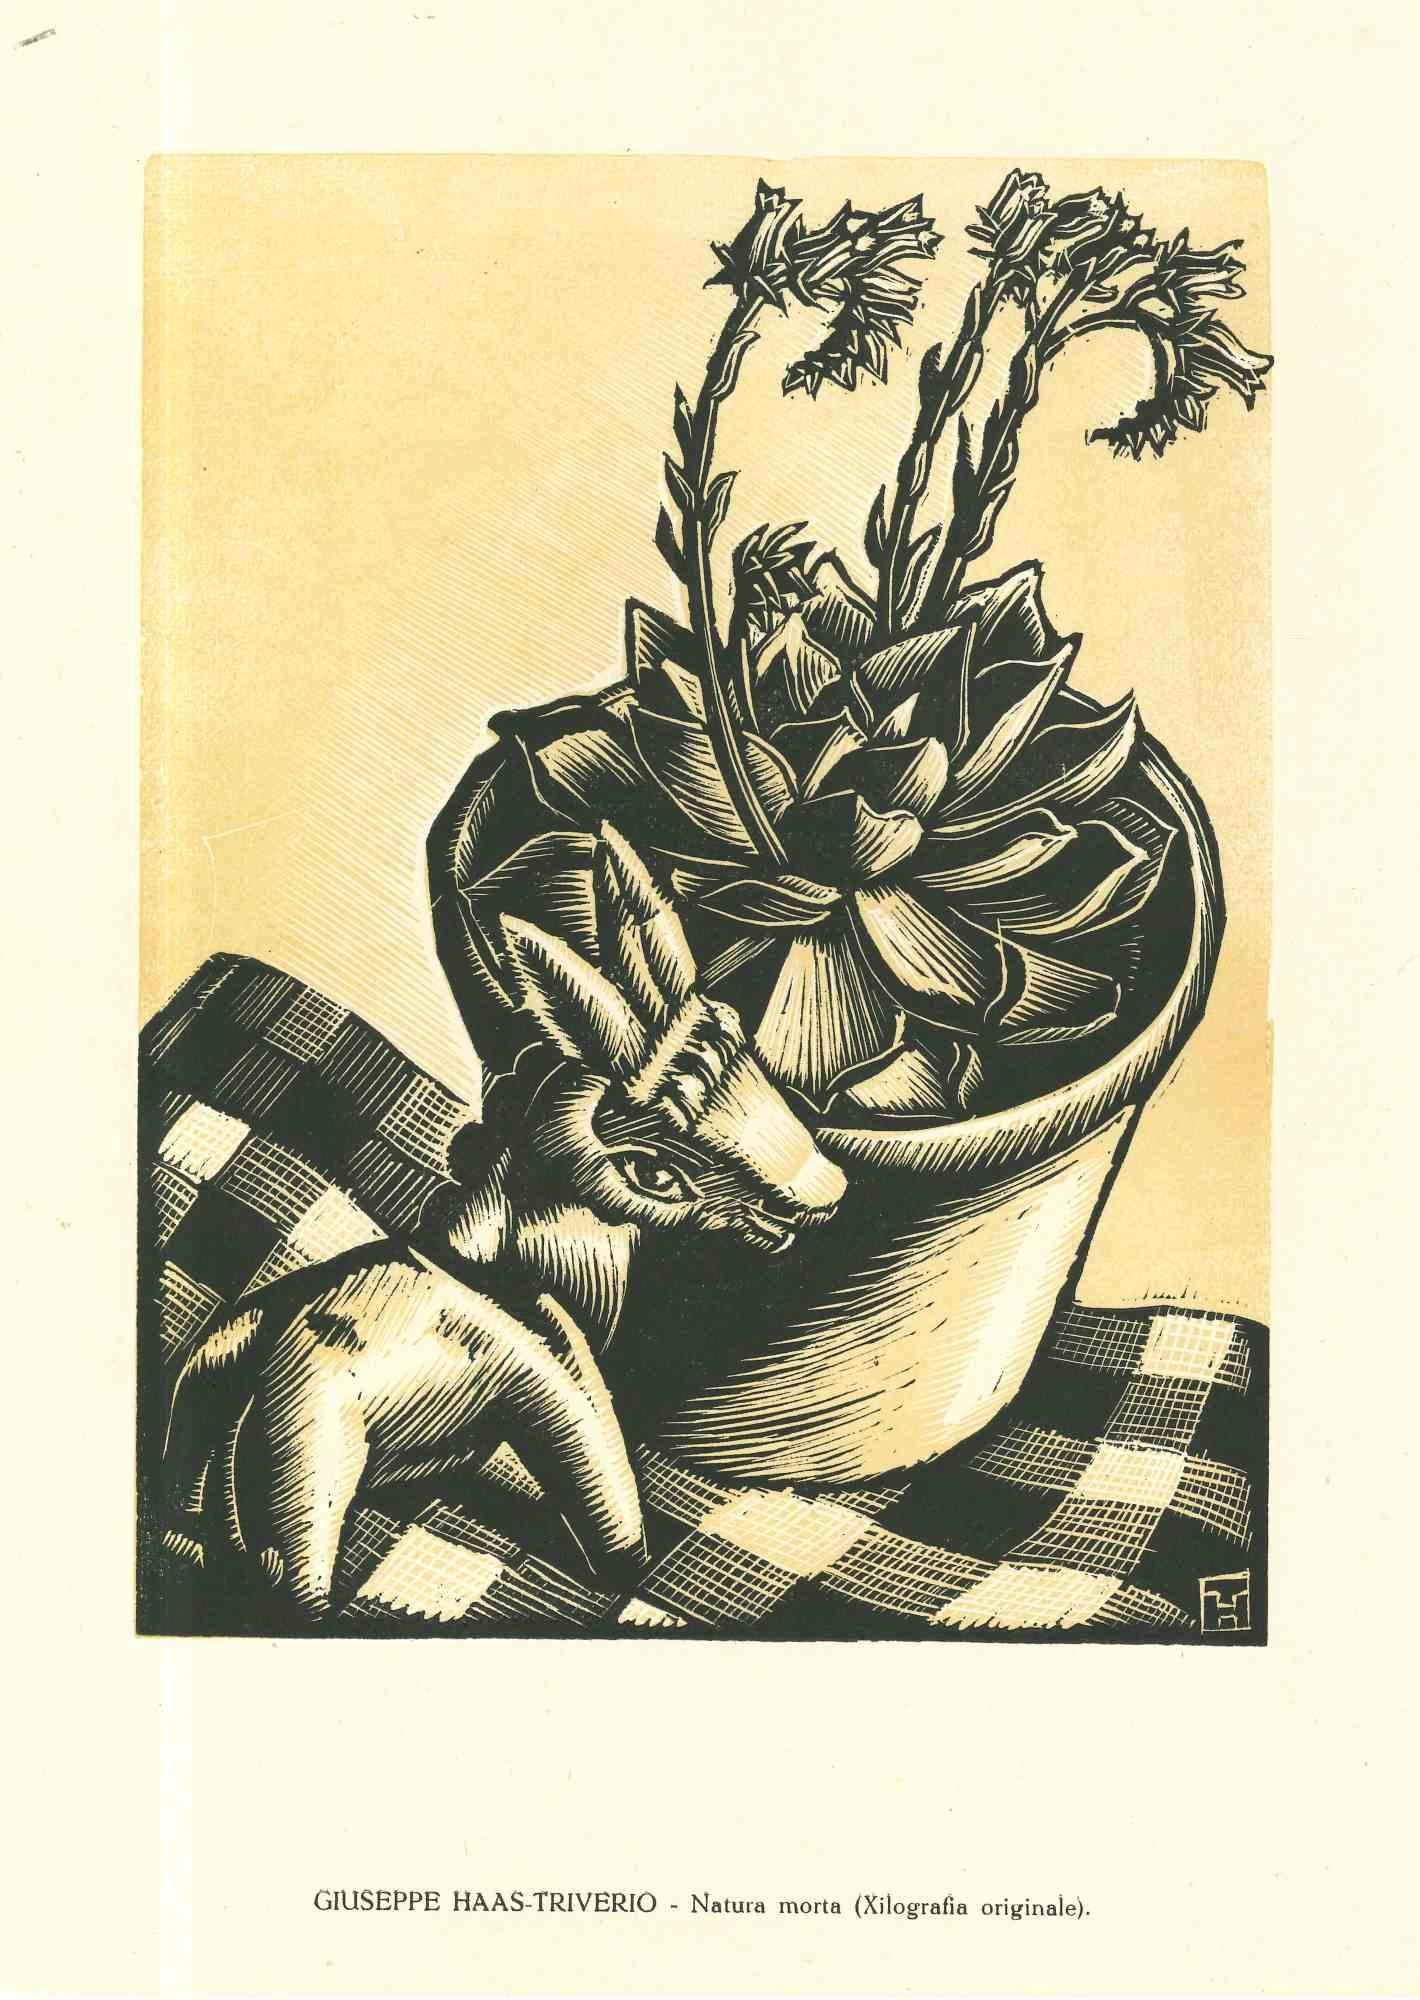 Giuseppe Haas-Triverio Still-Life Print – Stillleben  - Original Holzschnitt von G. Haas-Triverio - Anfang des 20. Jahrhunderts